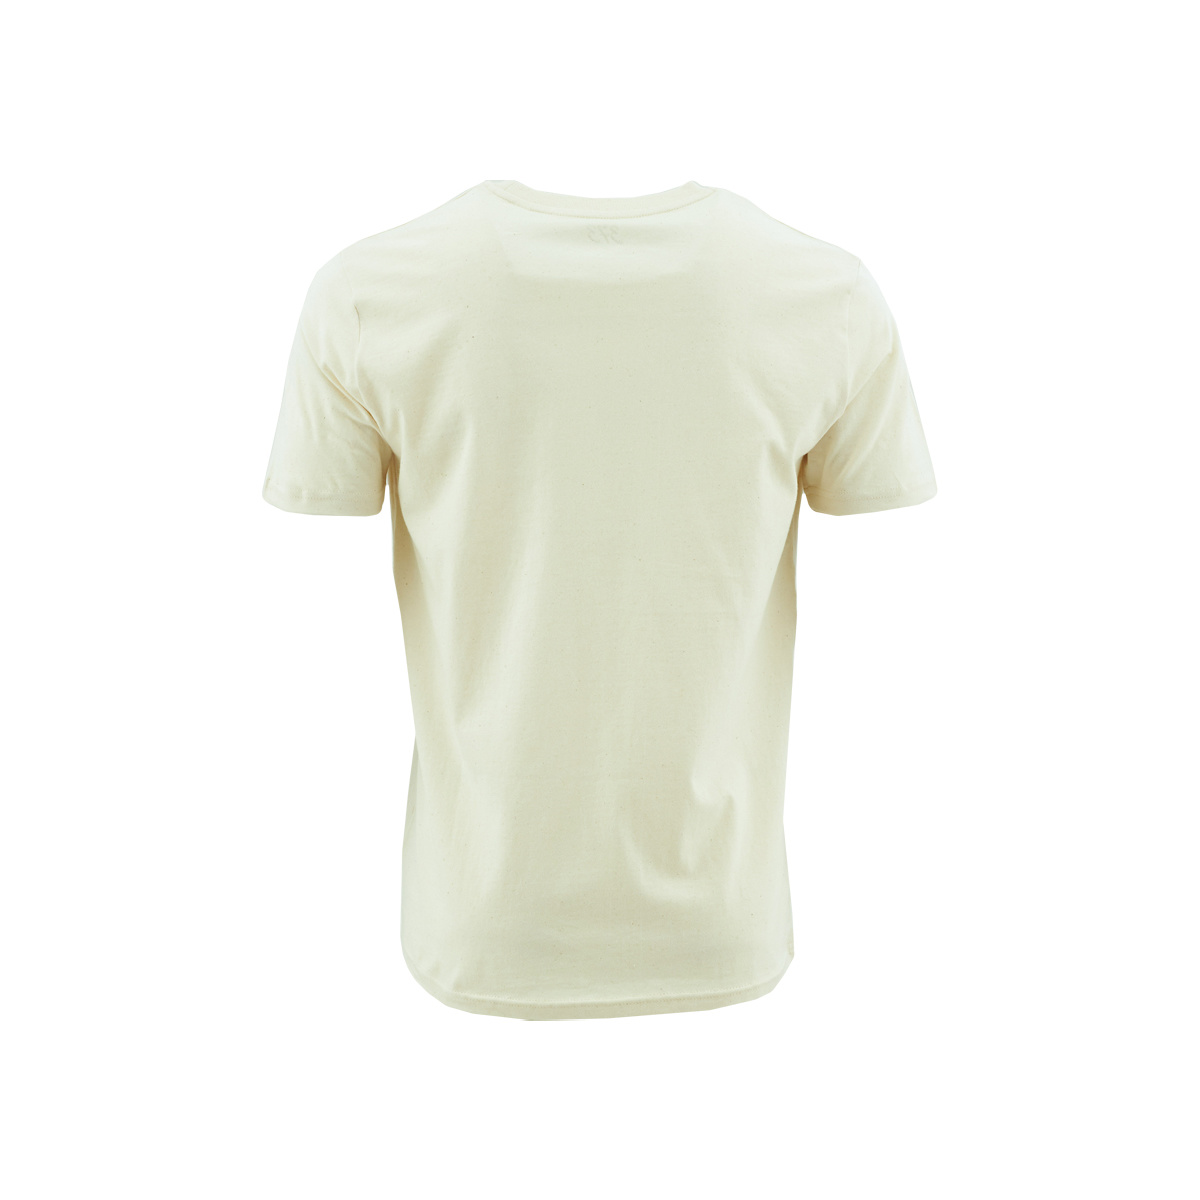 Topfanz T-shirt blanc cassé cercle voetbalvolkvuur